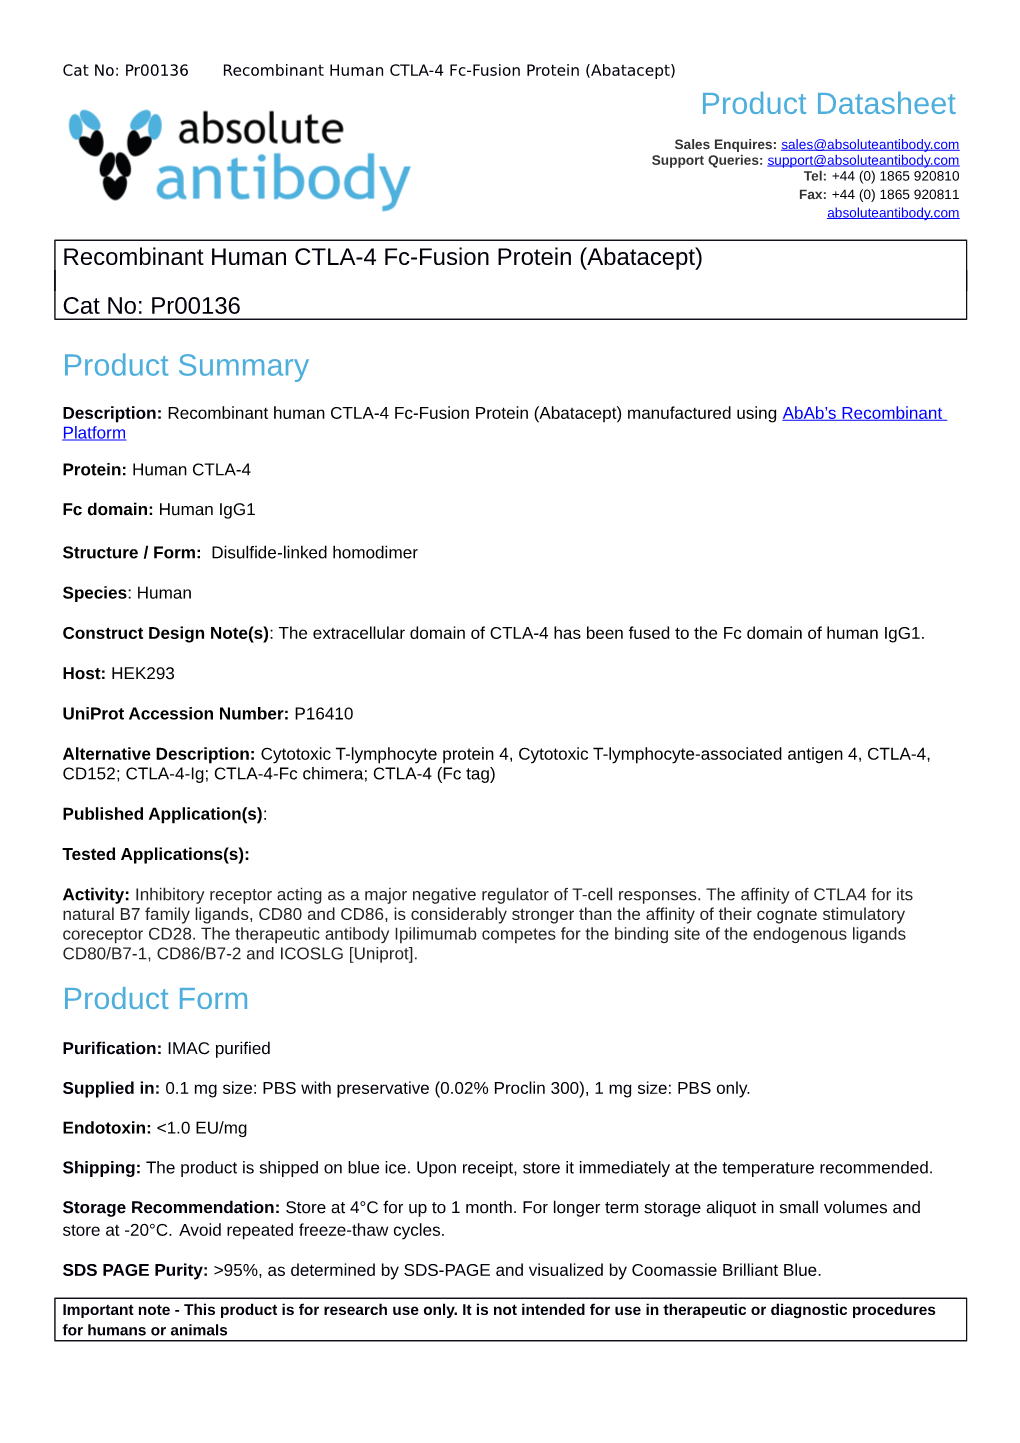 Pr00136-Product-Datasheet.Pdf